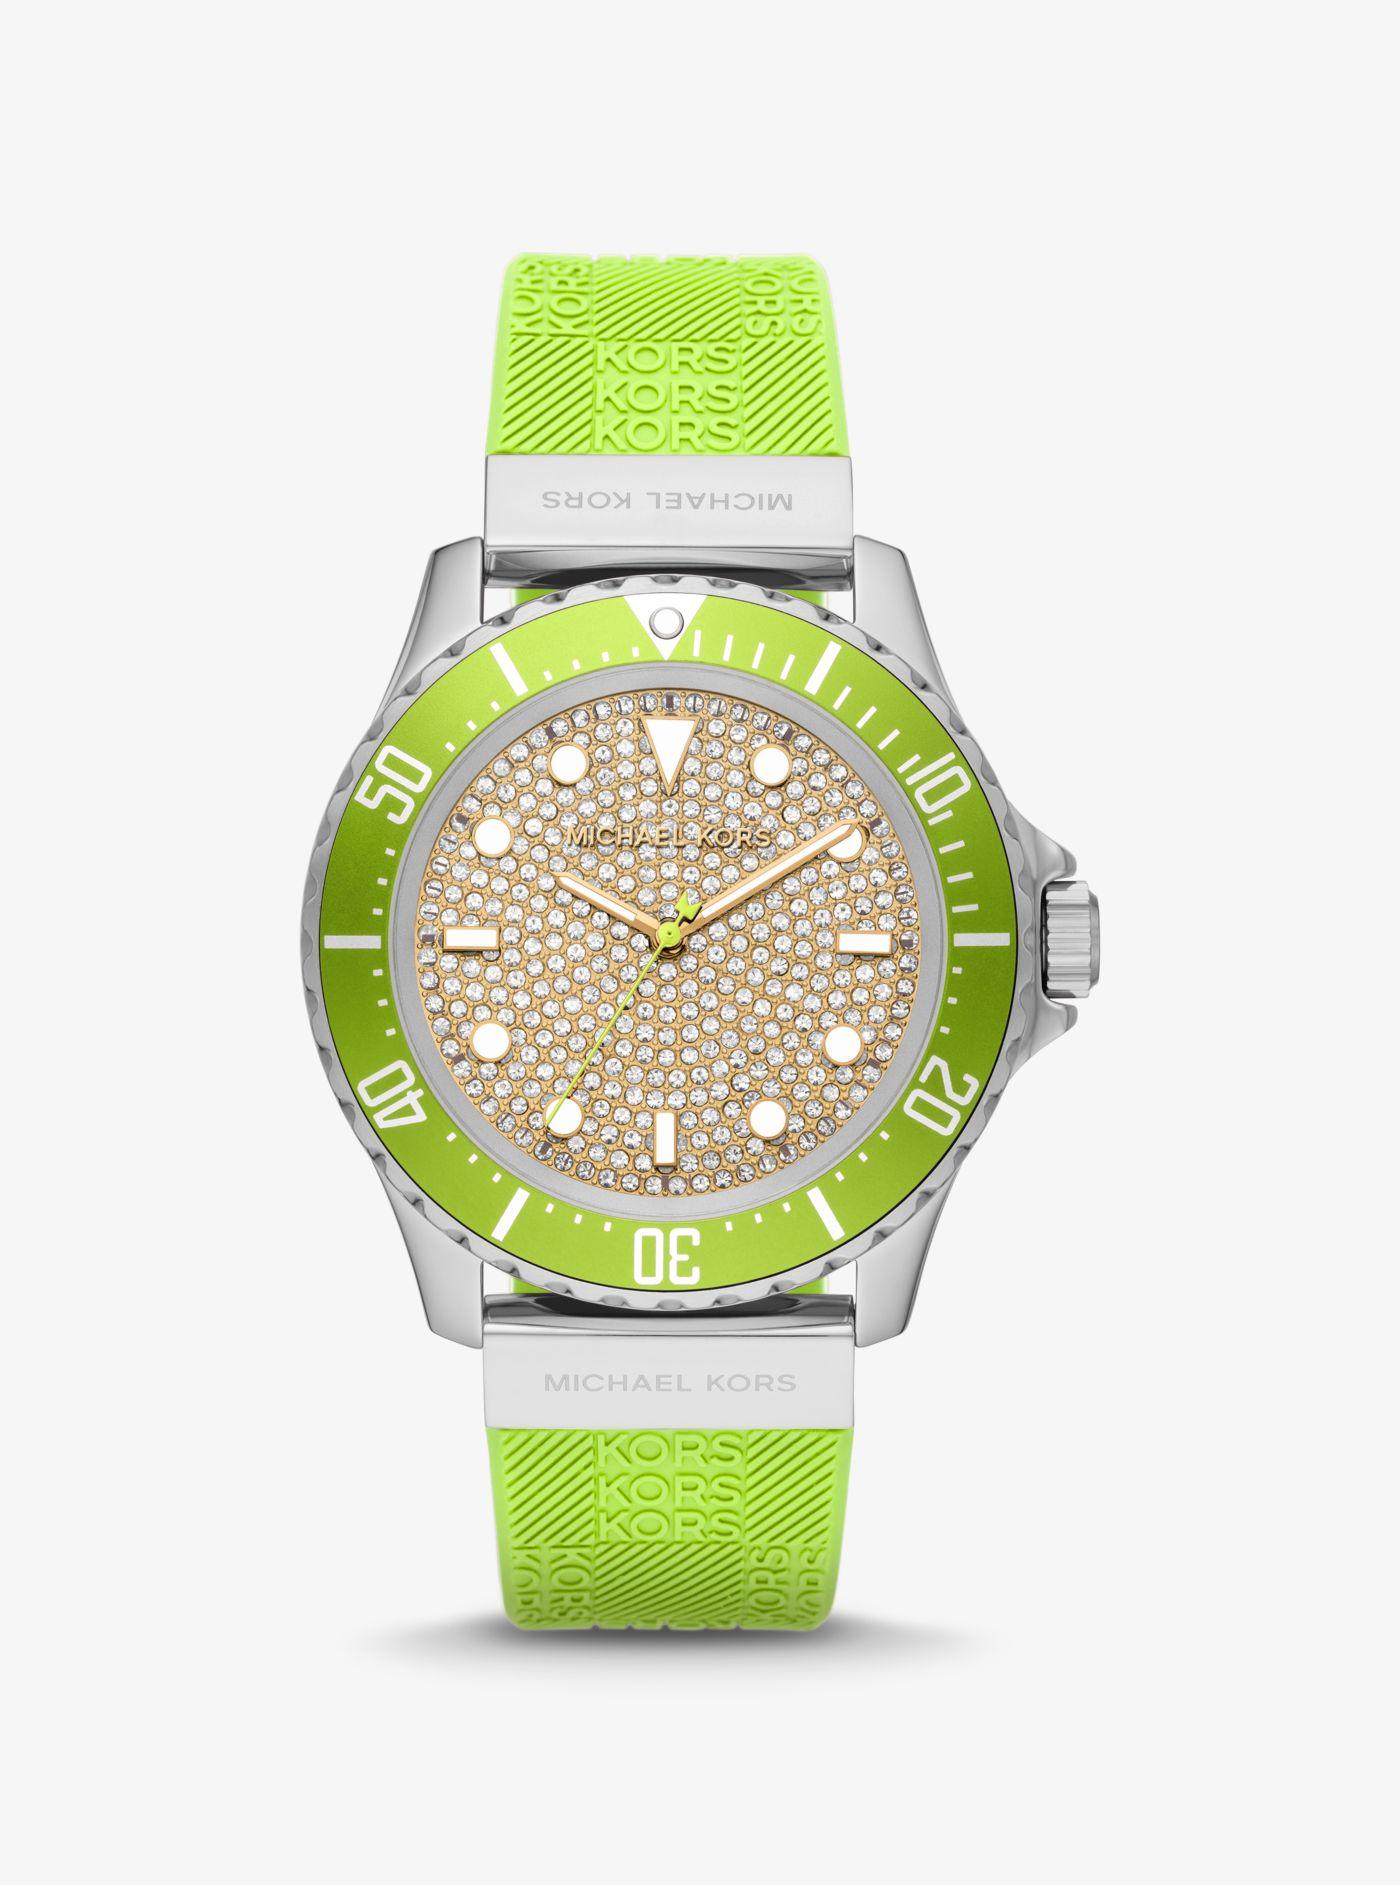 Michael Kors Women's Mini-Lennox Quartz Analog Silicone Strap Watch